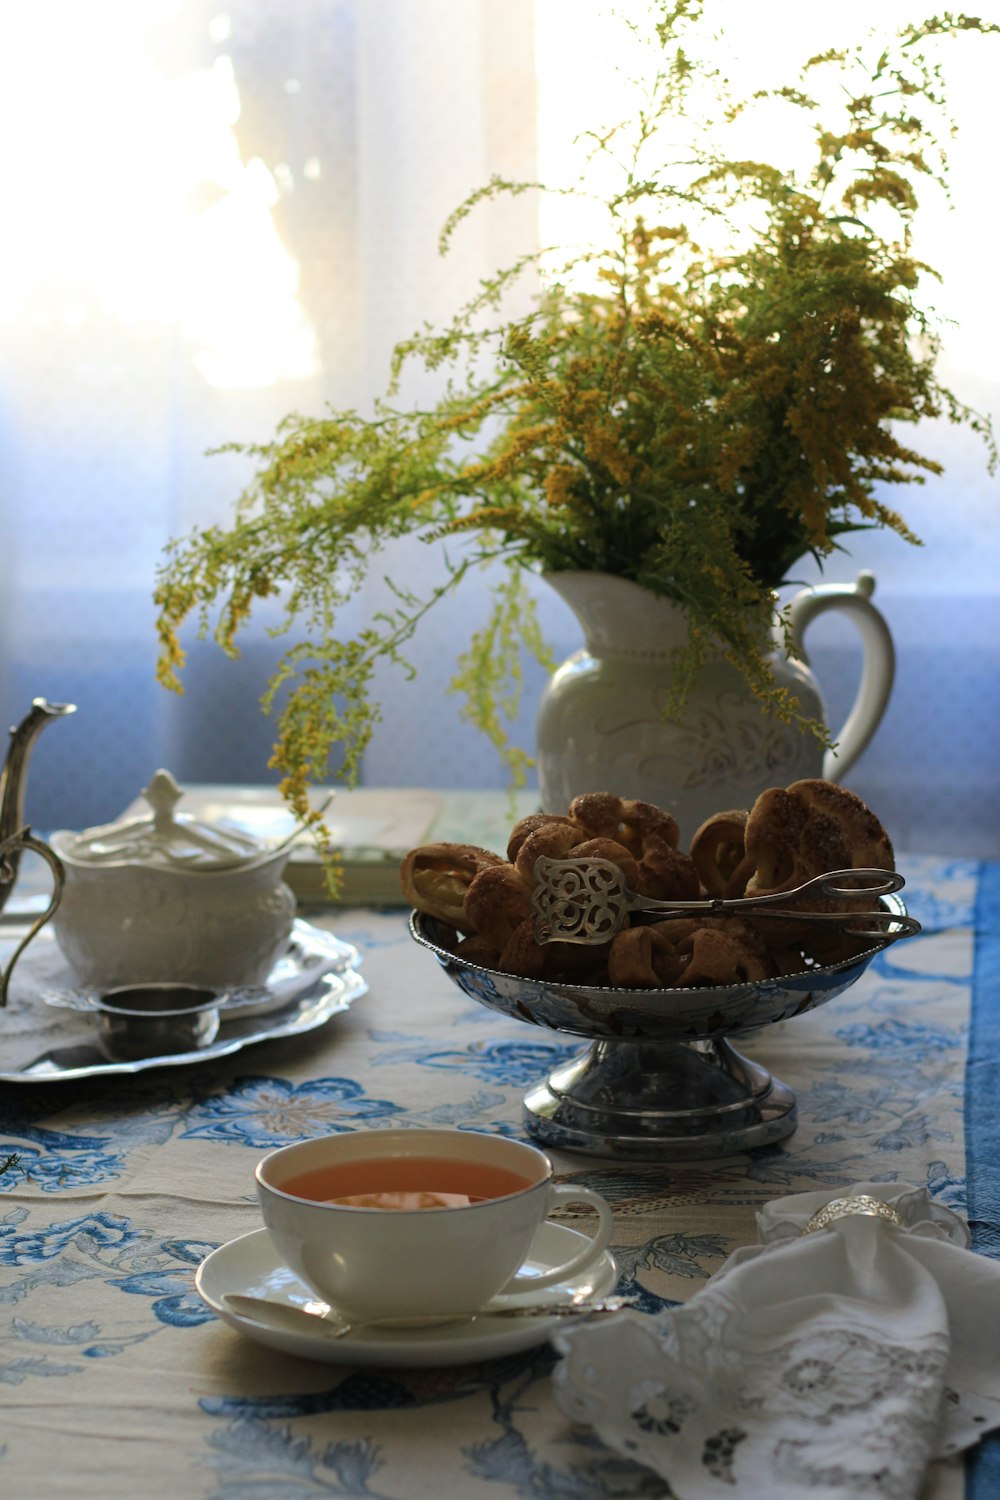 white ceramic teacup on saucer beside green plant